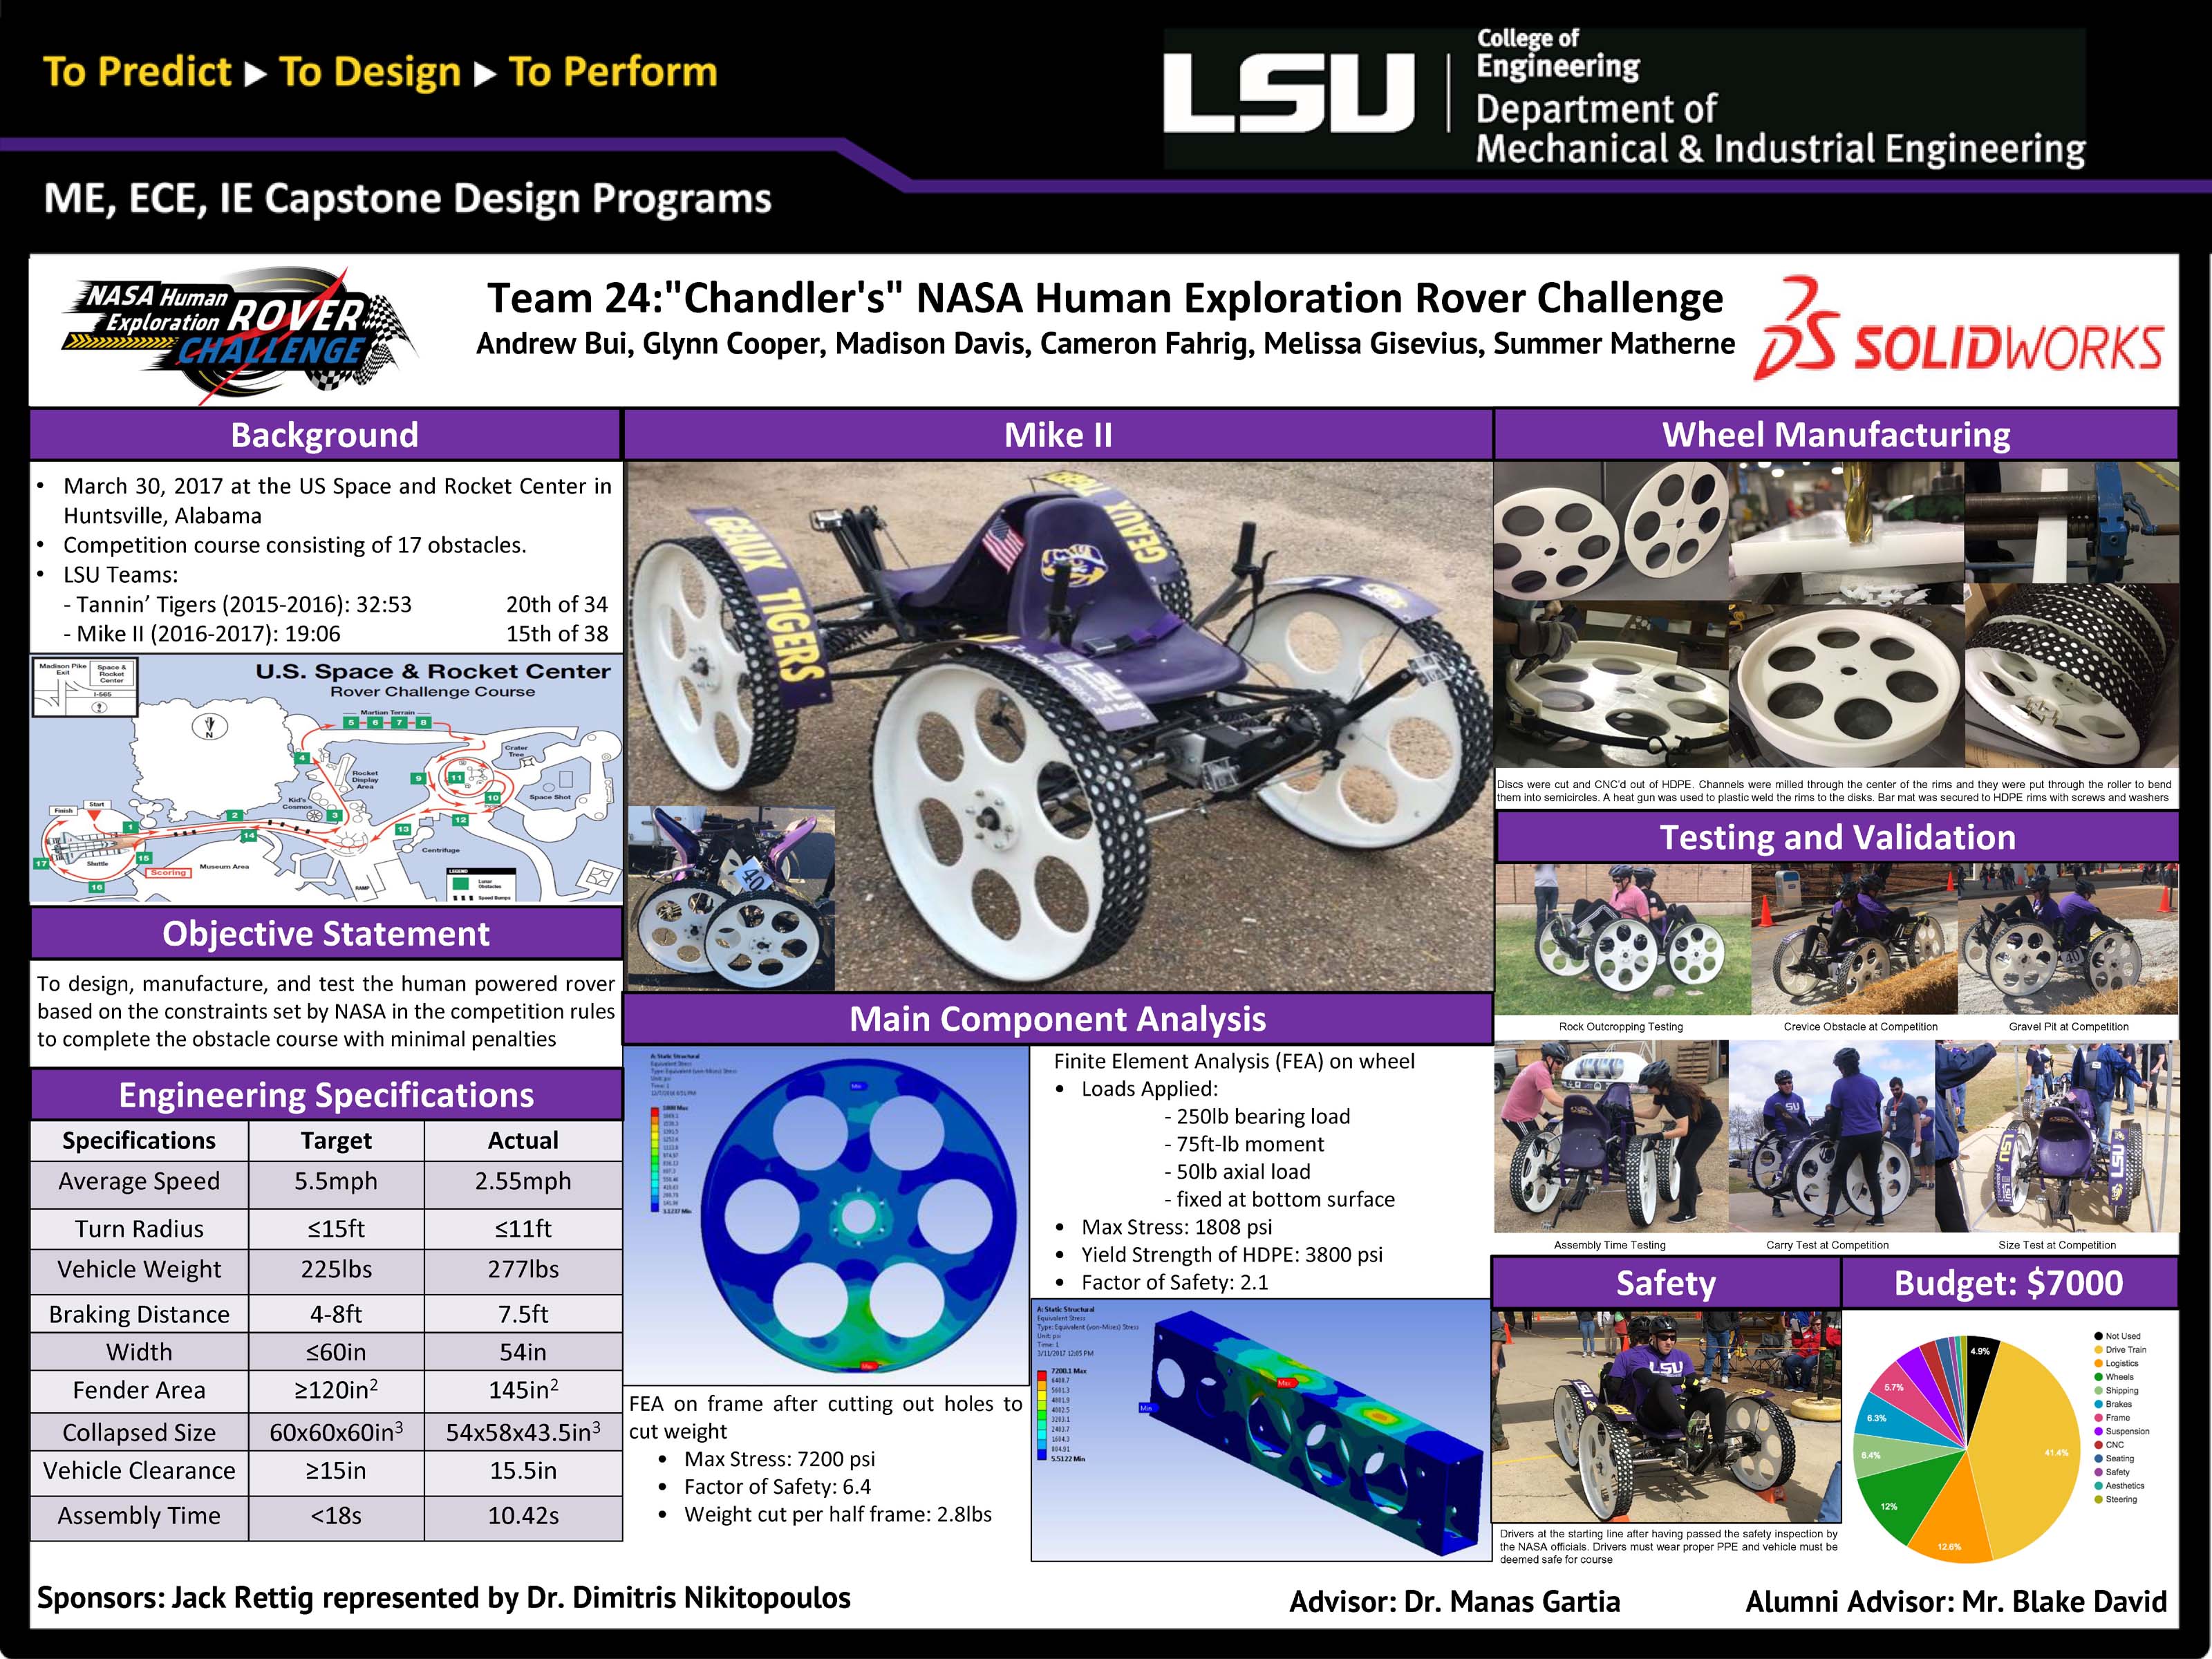 Project 24: 'Chandler's' NASA Human Exploration Rover Challenge